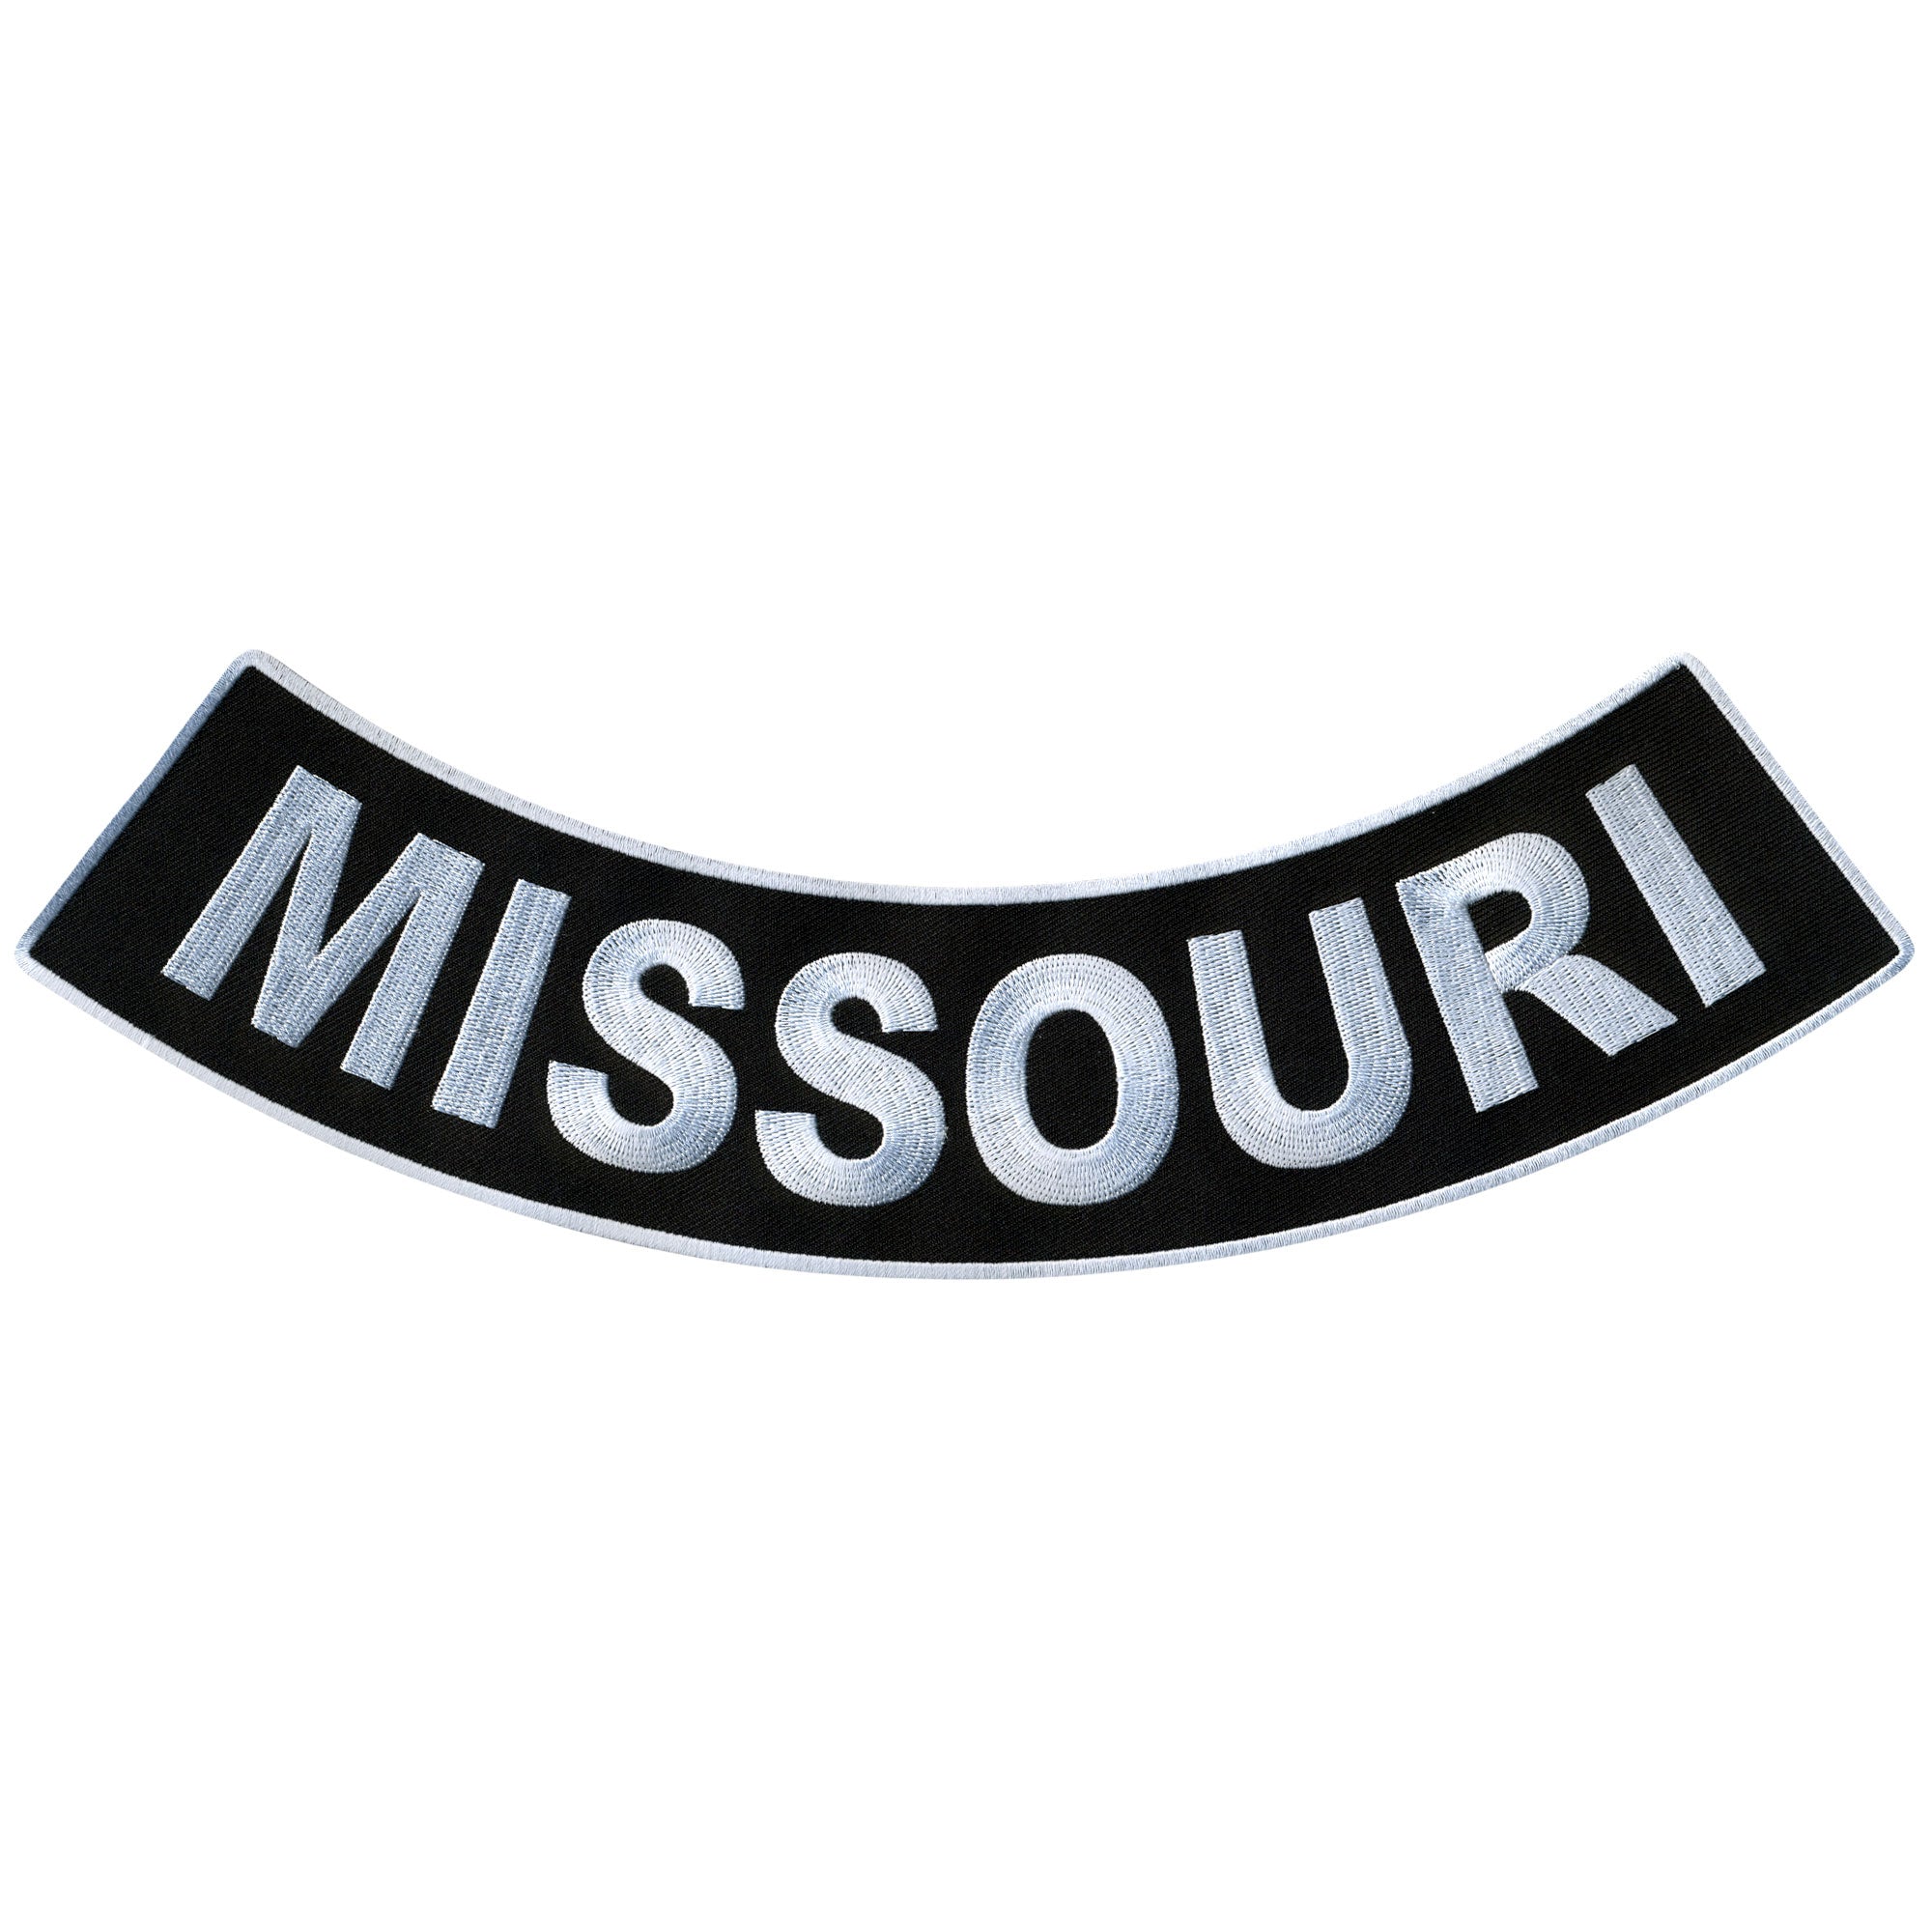 Hot Leathers Missouri 12” X 3” Bottom Rocker Patch